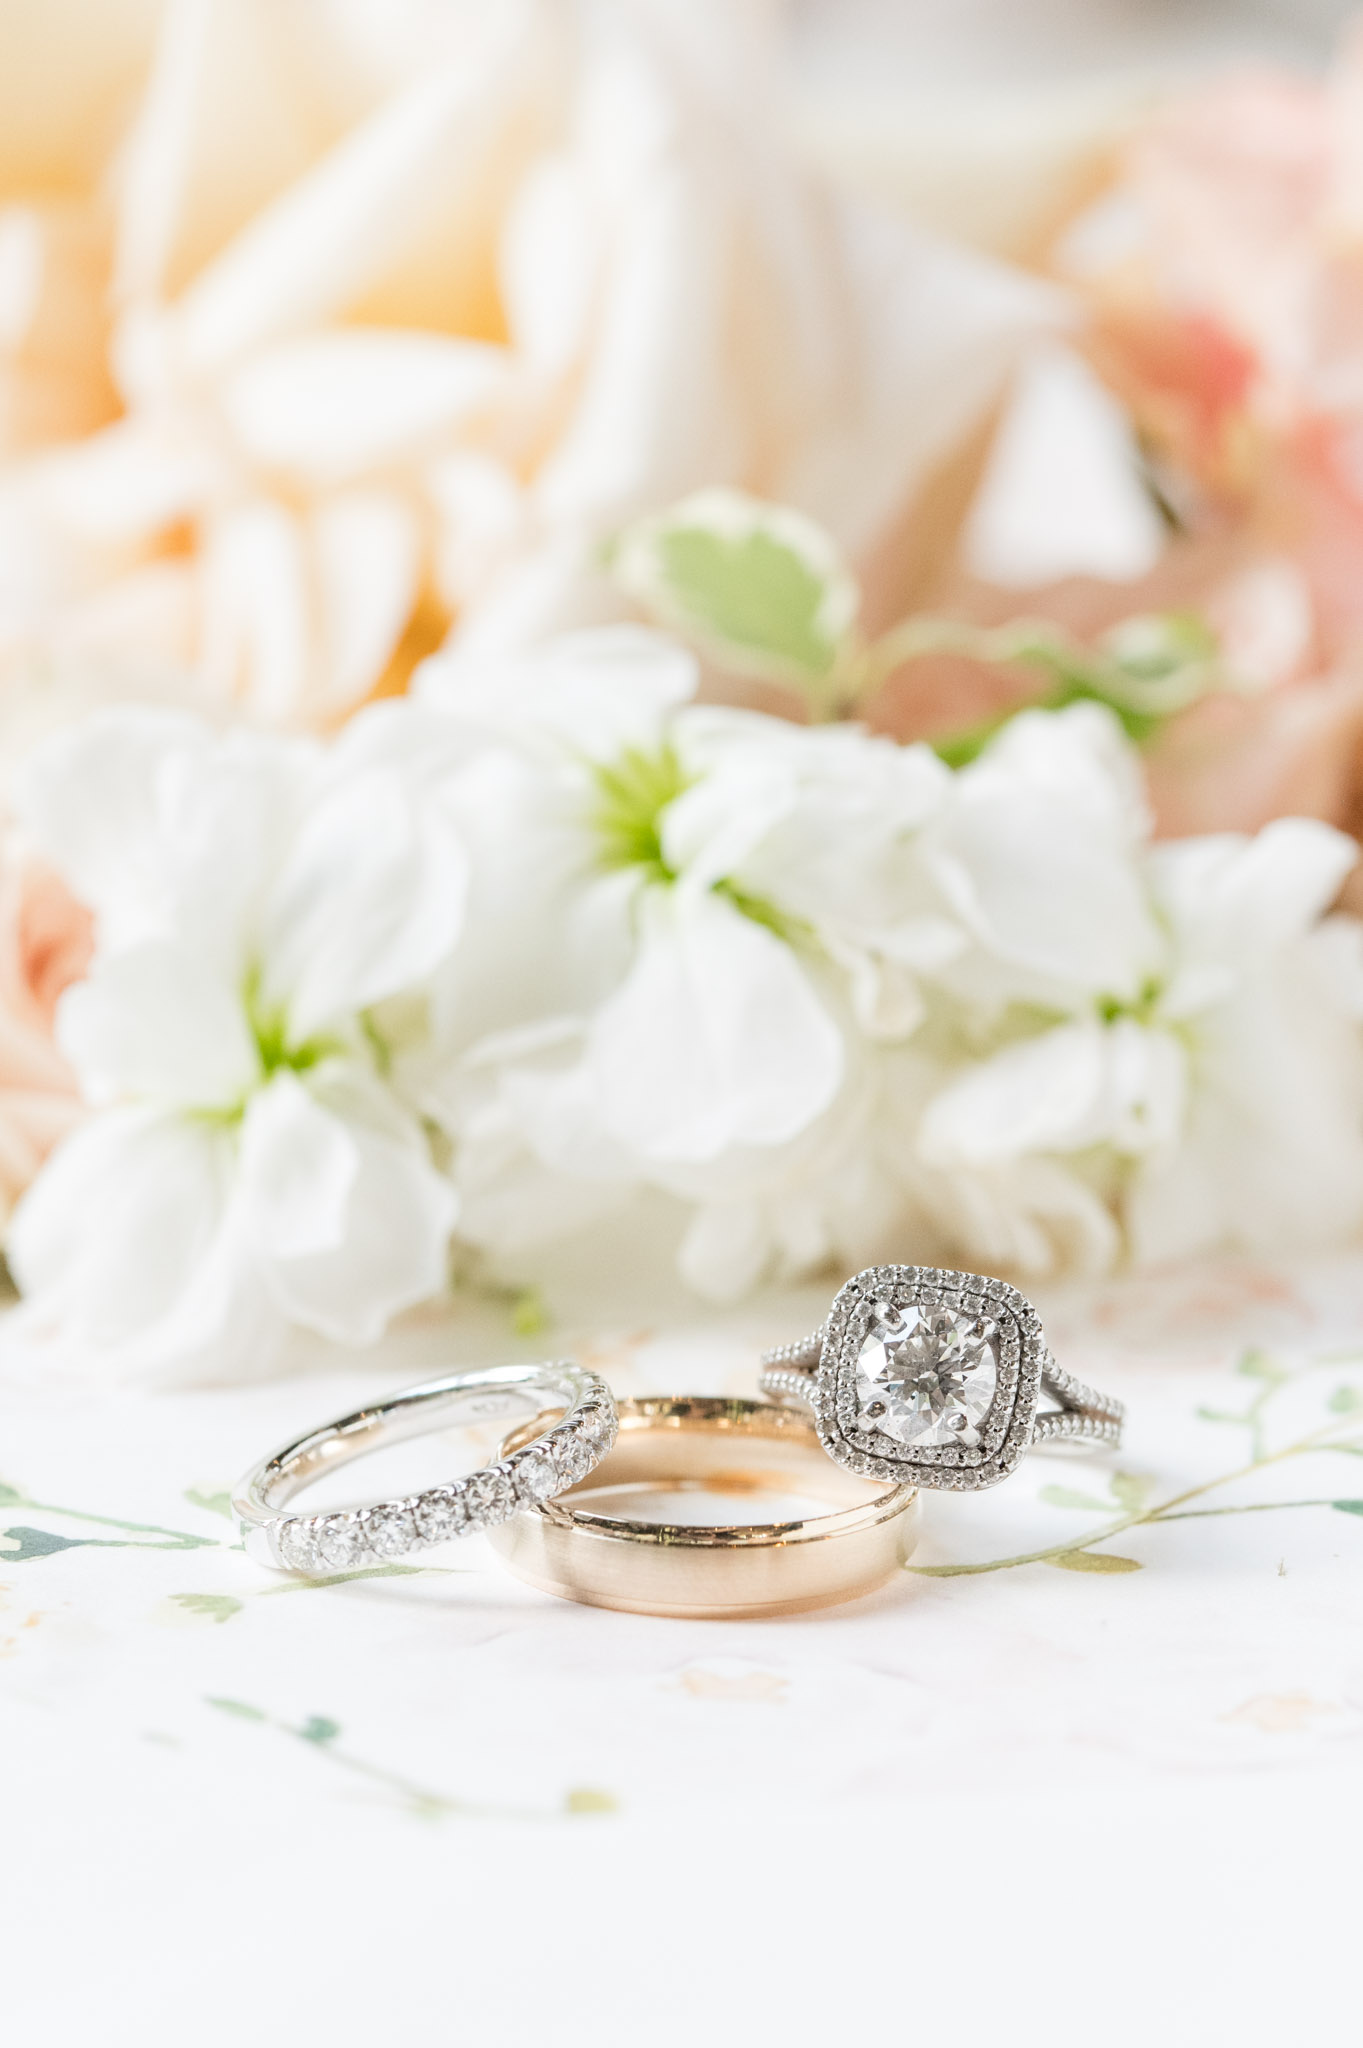 Wedding rings sit next to flowers.